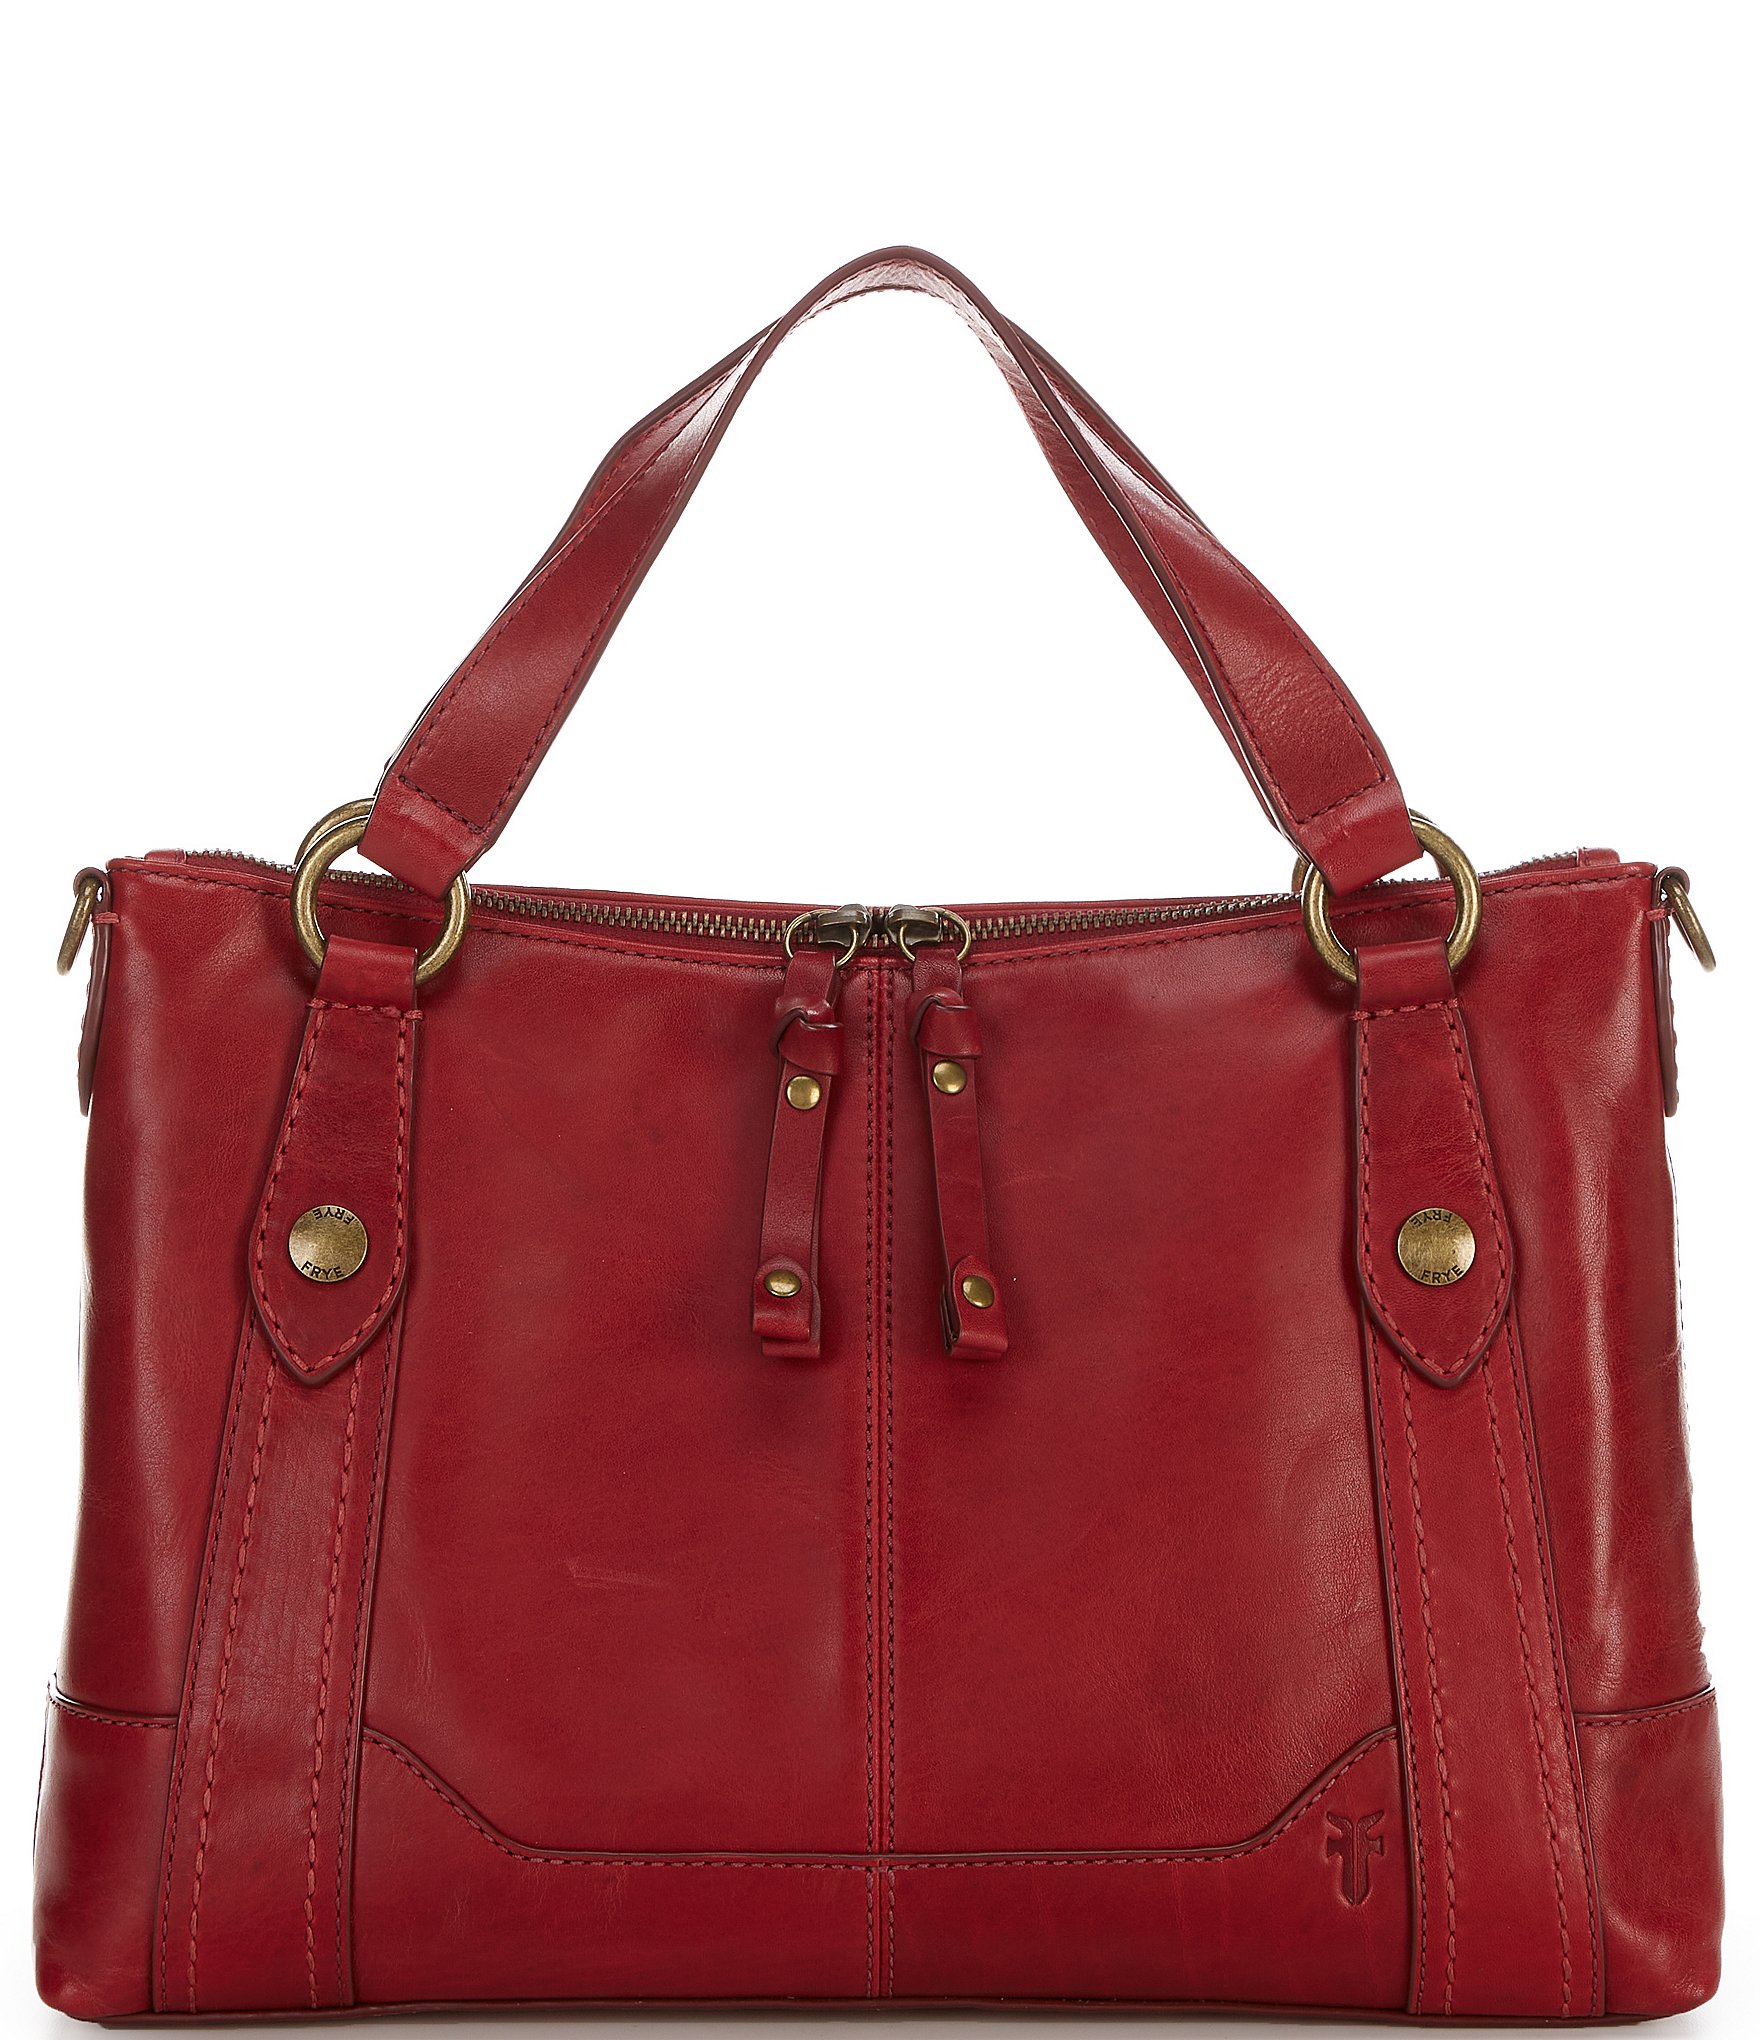 Frye Leather Handbags Melissa Drawstring Hobo Bag Brown Beige Color Purse  (NWT) | Hobo bag, Leather handbags, Leather